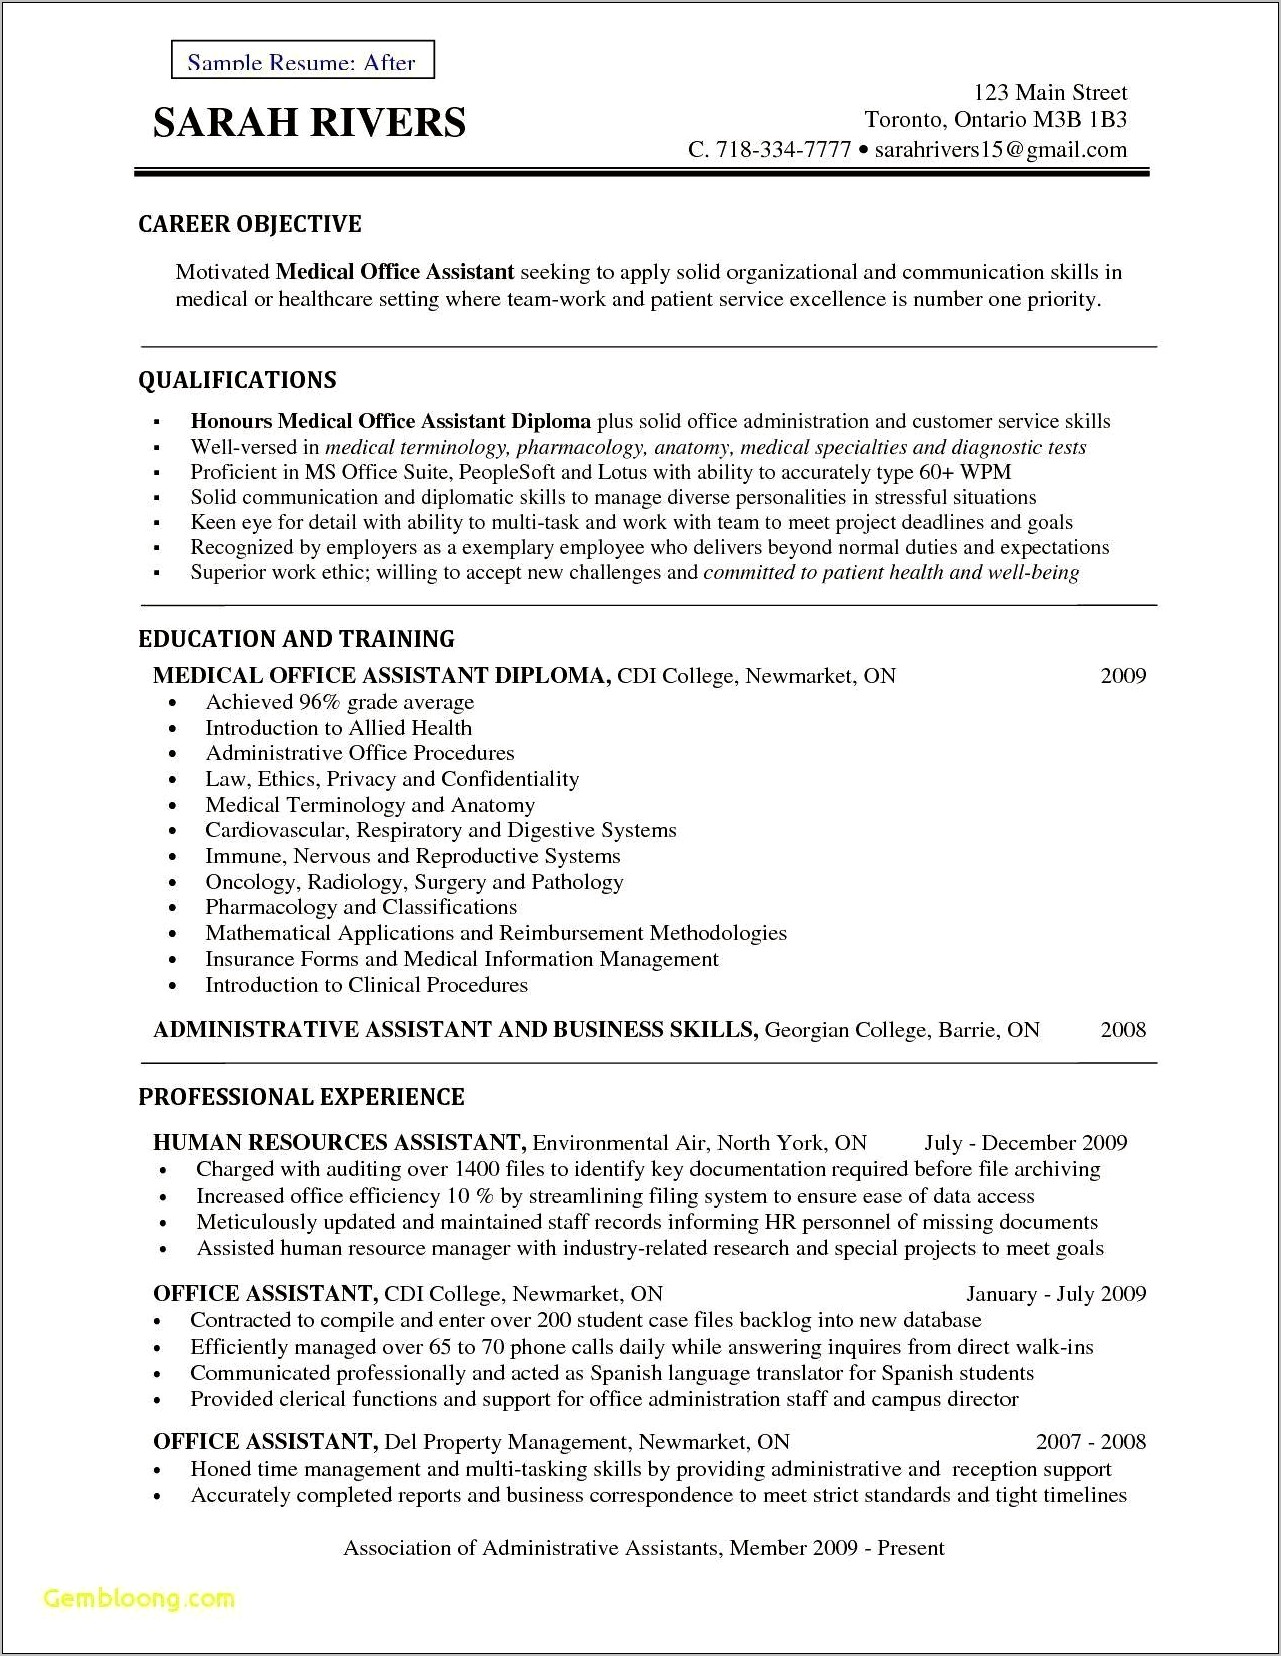 Resume Objective For Health Insurance Job